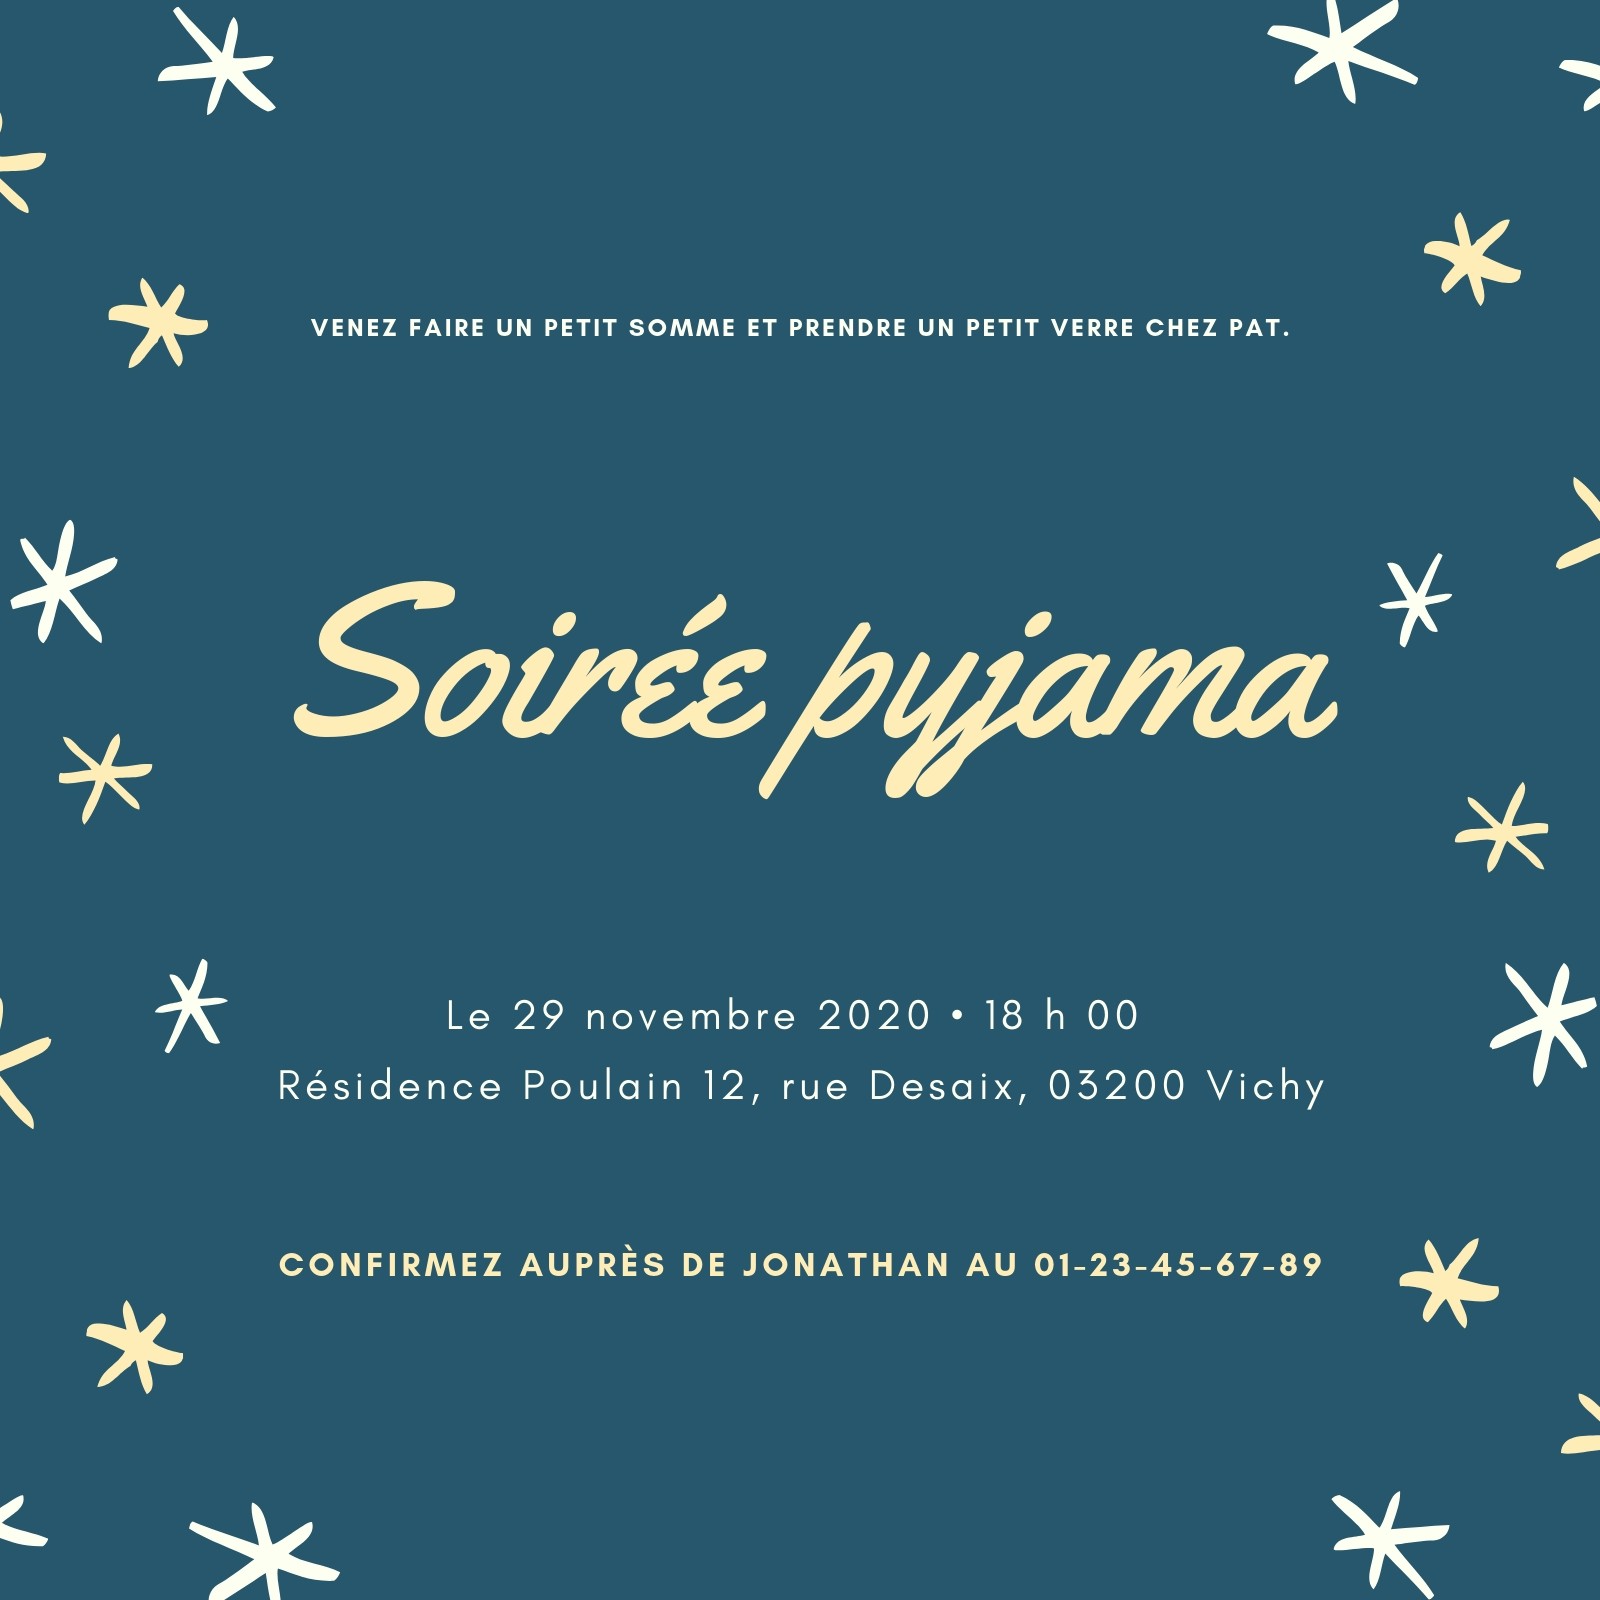 Invitation soirée pyjama - Soirée pyjama party invitation